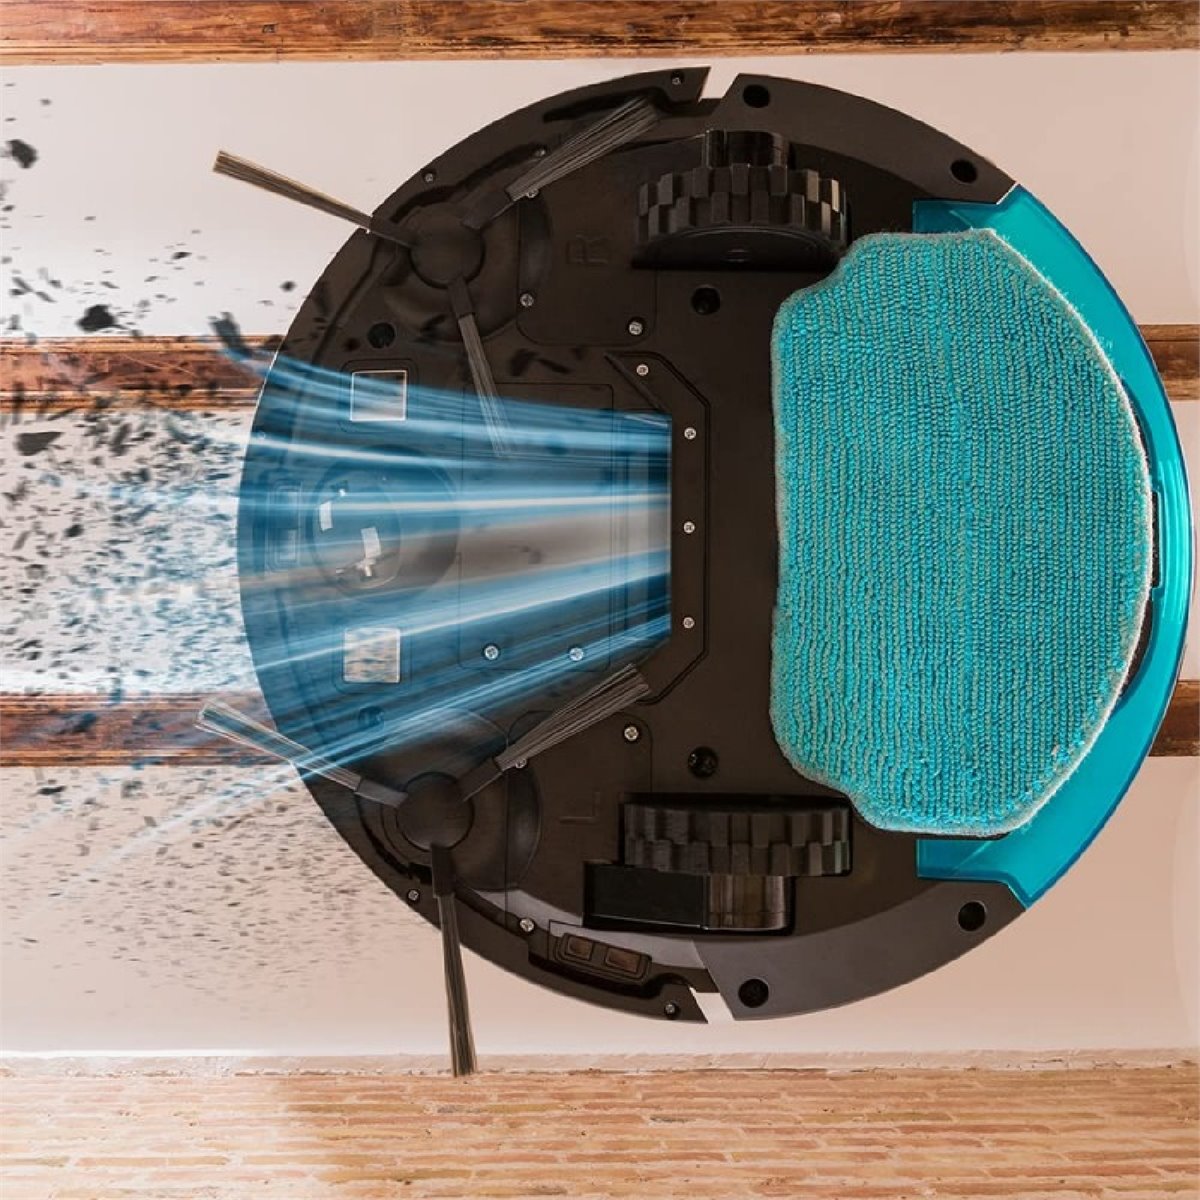 Opiniones Robot Conga Cecotec 11090 Spin Revolution Home&Wash